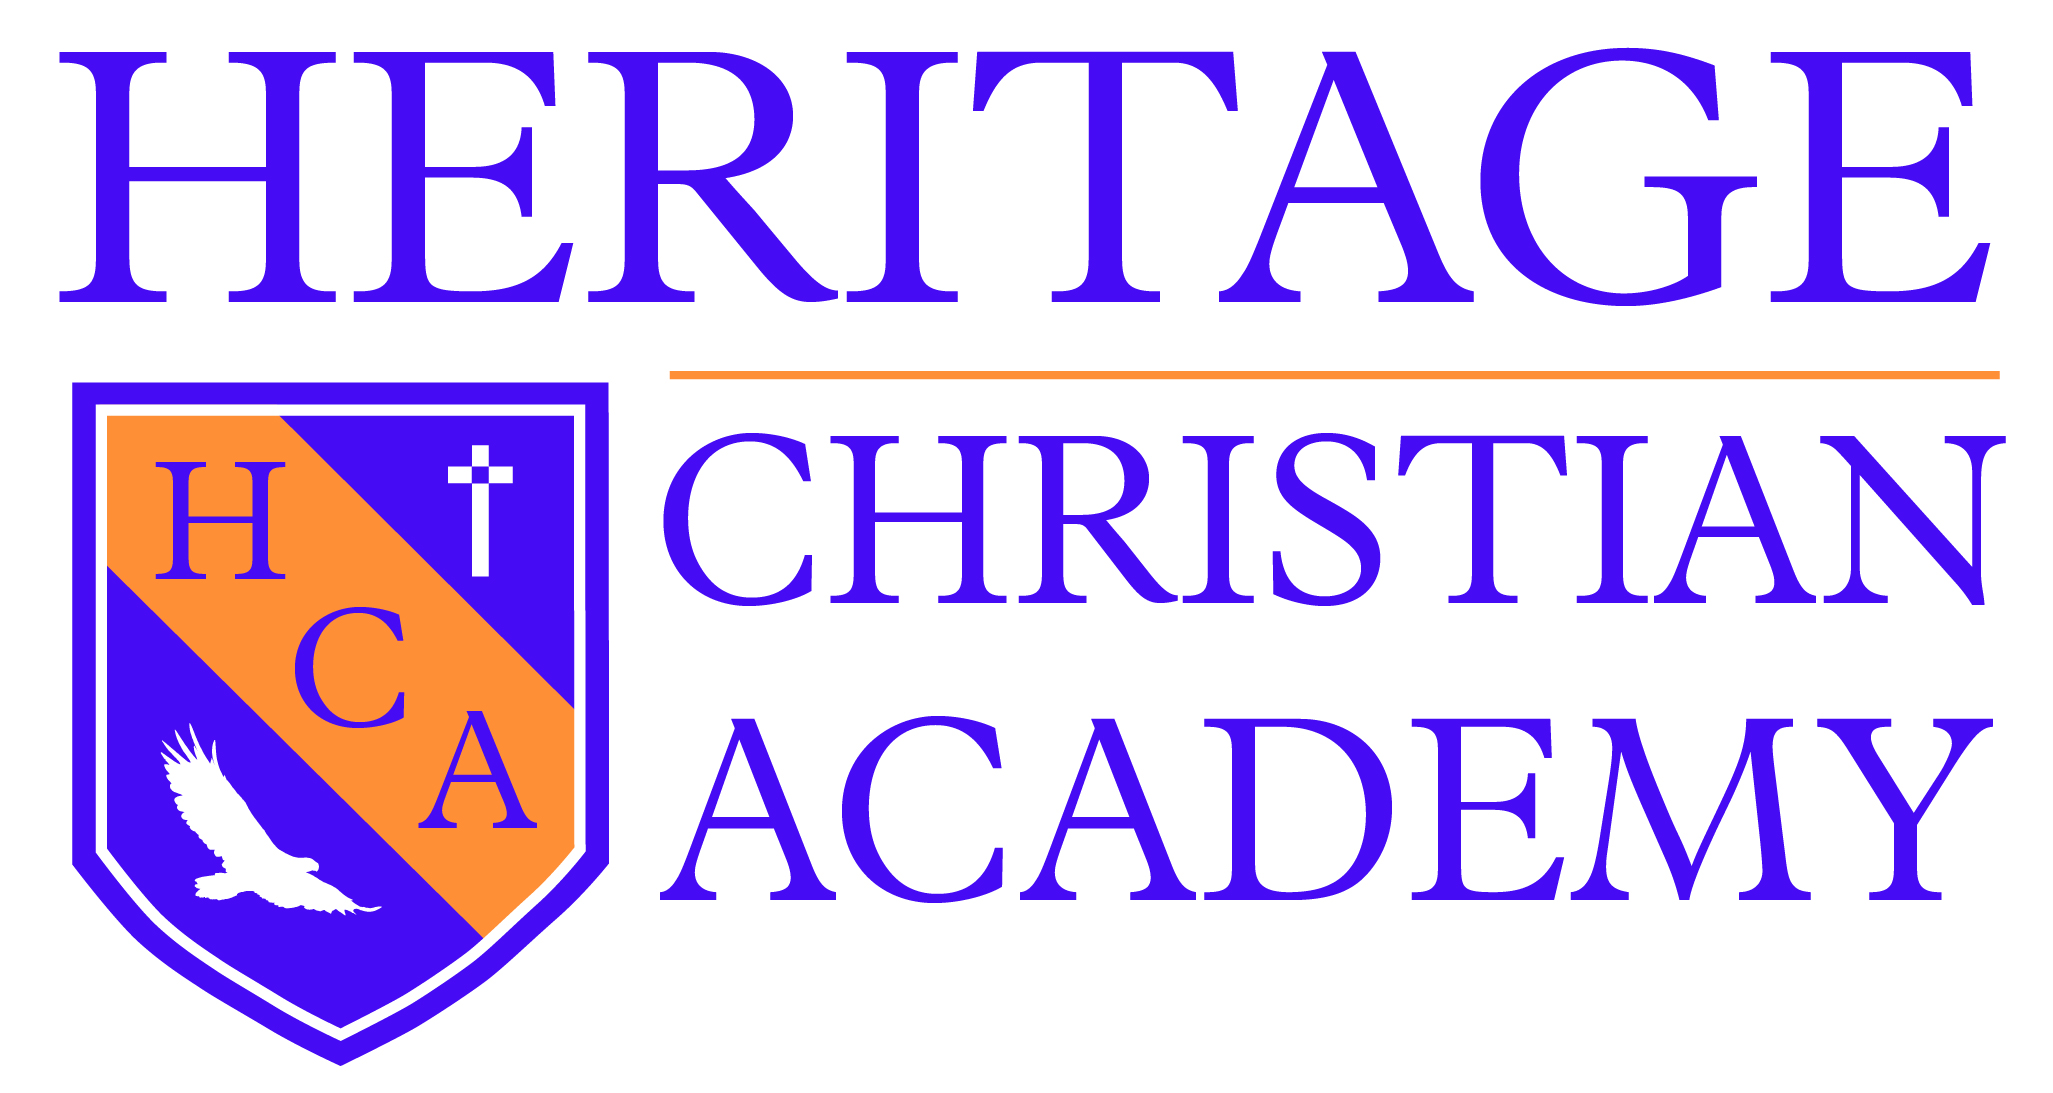 Heritage Christian Academy Logo